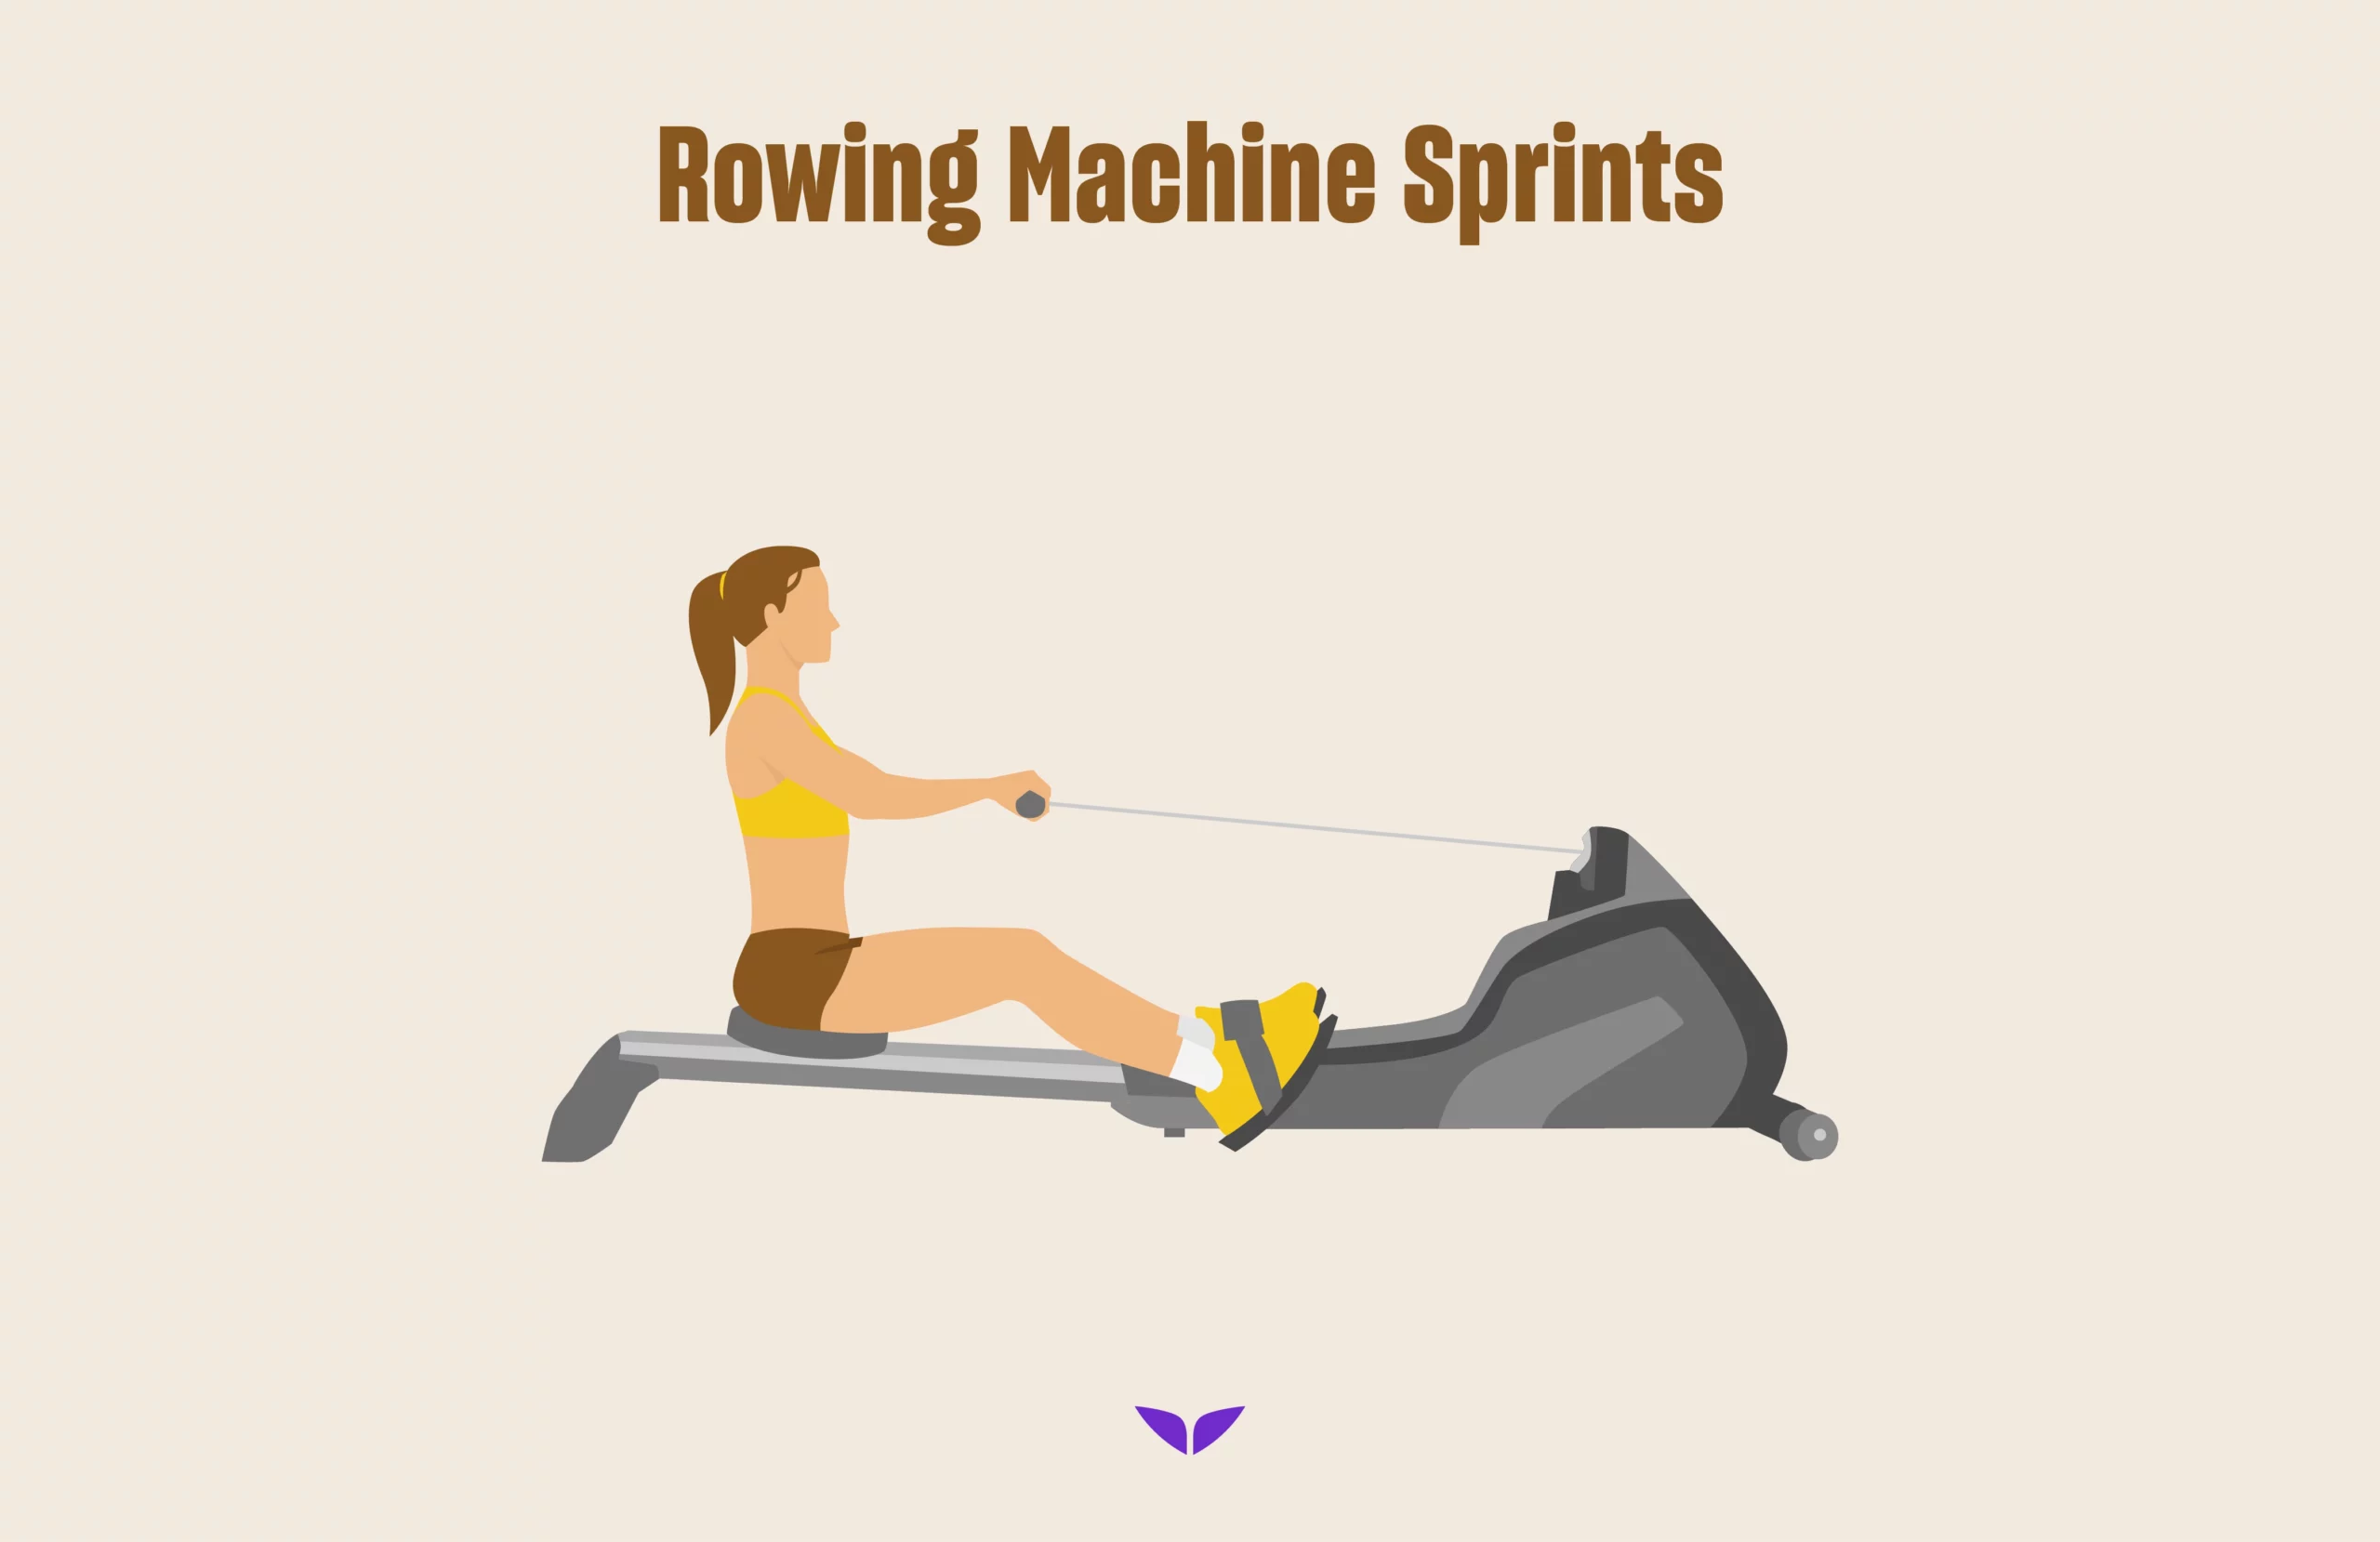 Rowing machine sprints